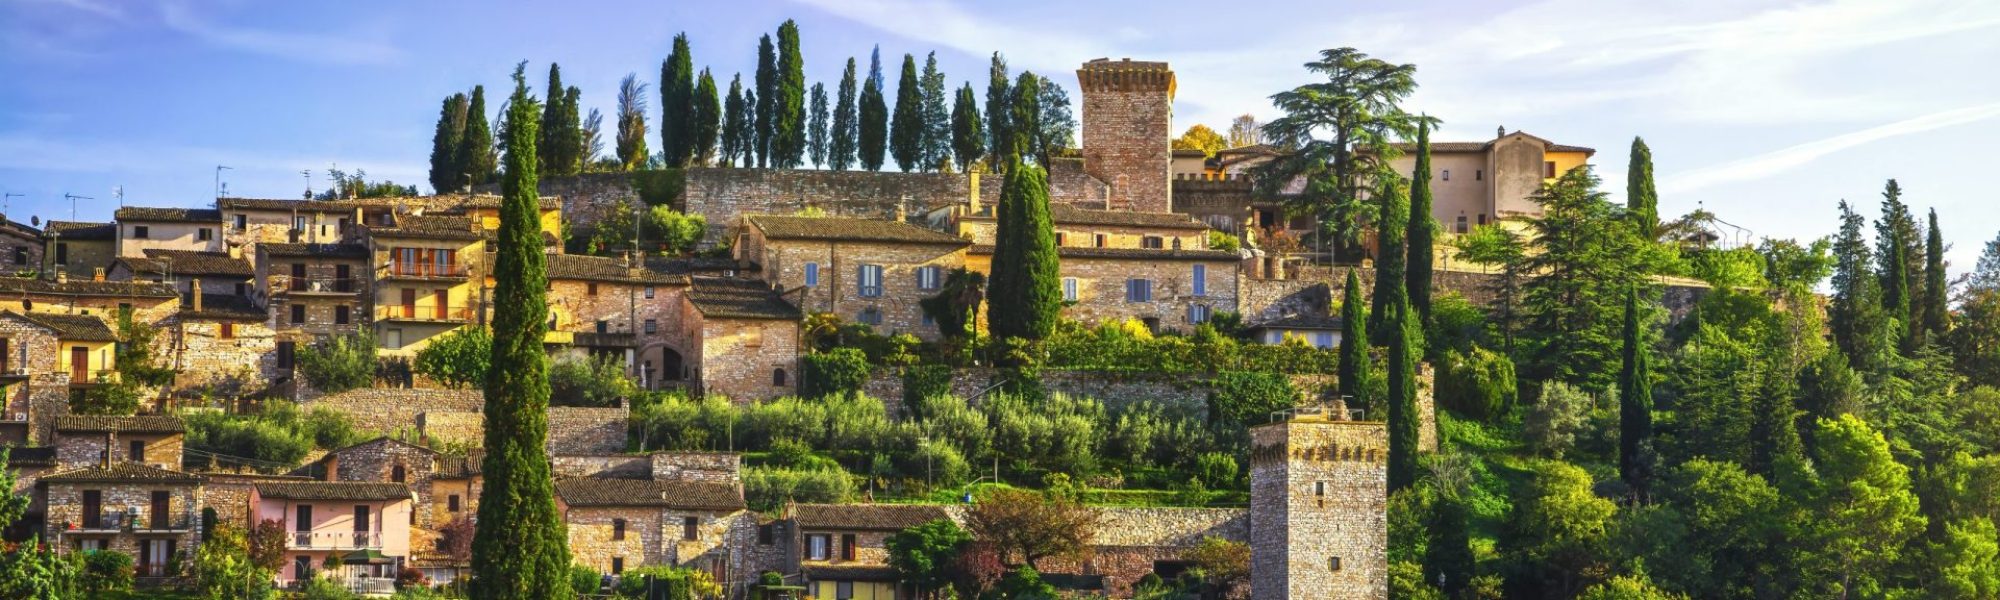 Spello medieval village skyline. Perugia, Umbria, Italy, Europe.